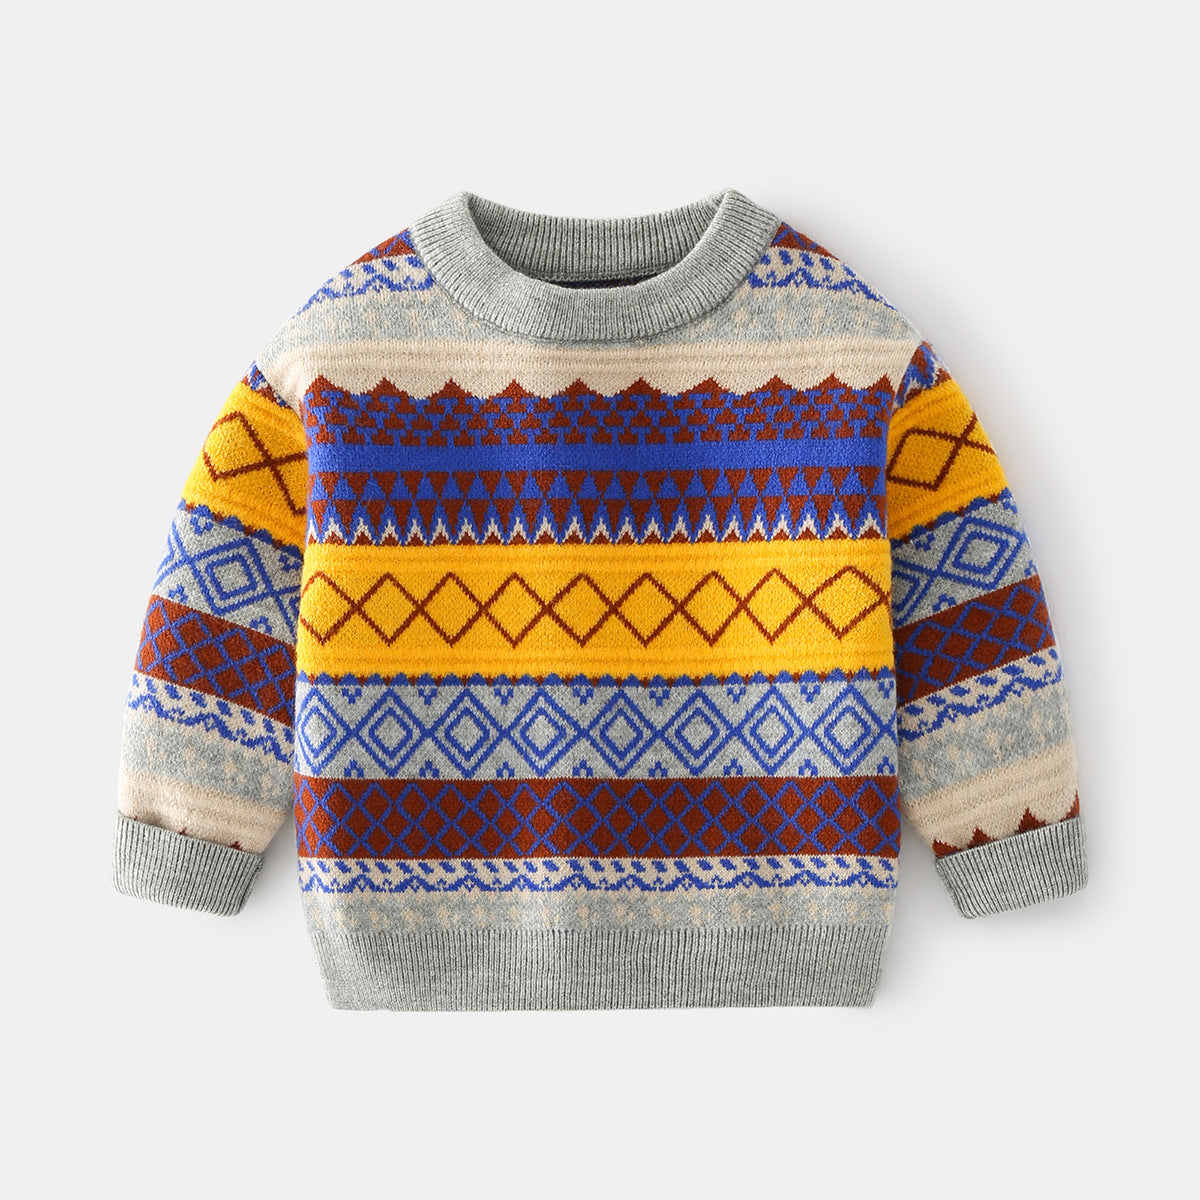 [513588] - Atasan Sweater Rajut Lengan Panjang Anak Cowok Cewek - Motif Pattern Abstract